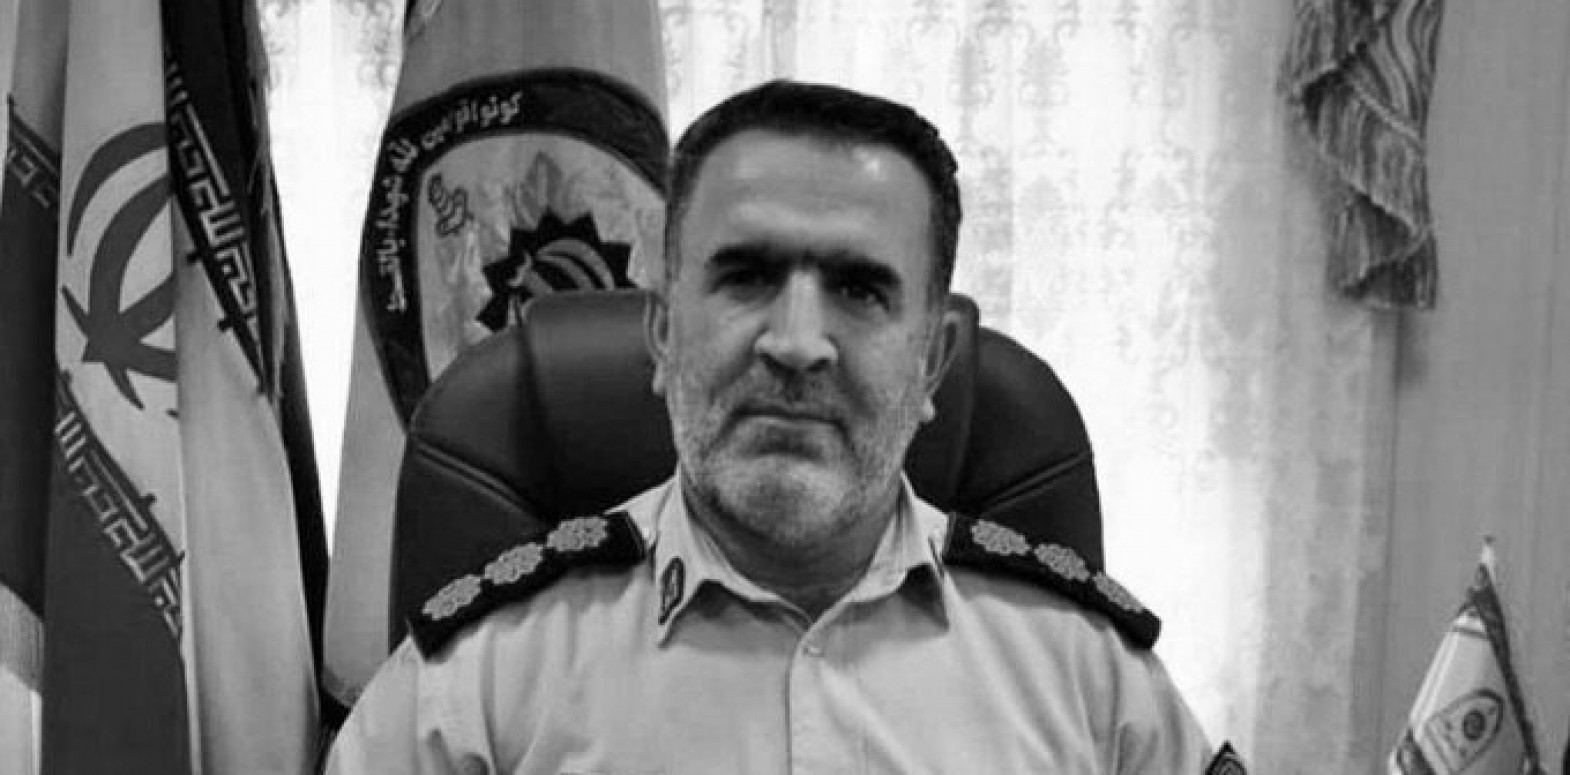 ما حقيقة مقتل قائد شرطة كوهدشت غربي إيران مؤخراً؟